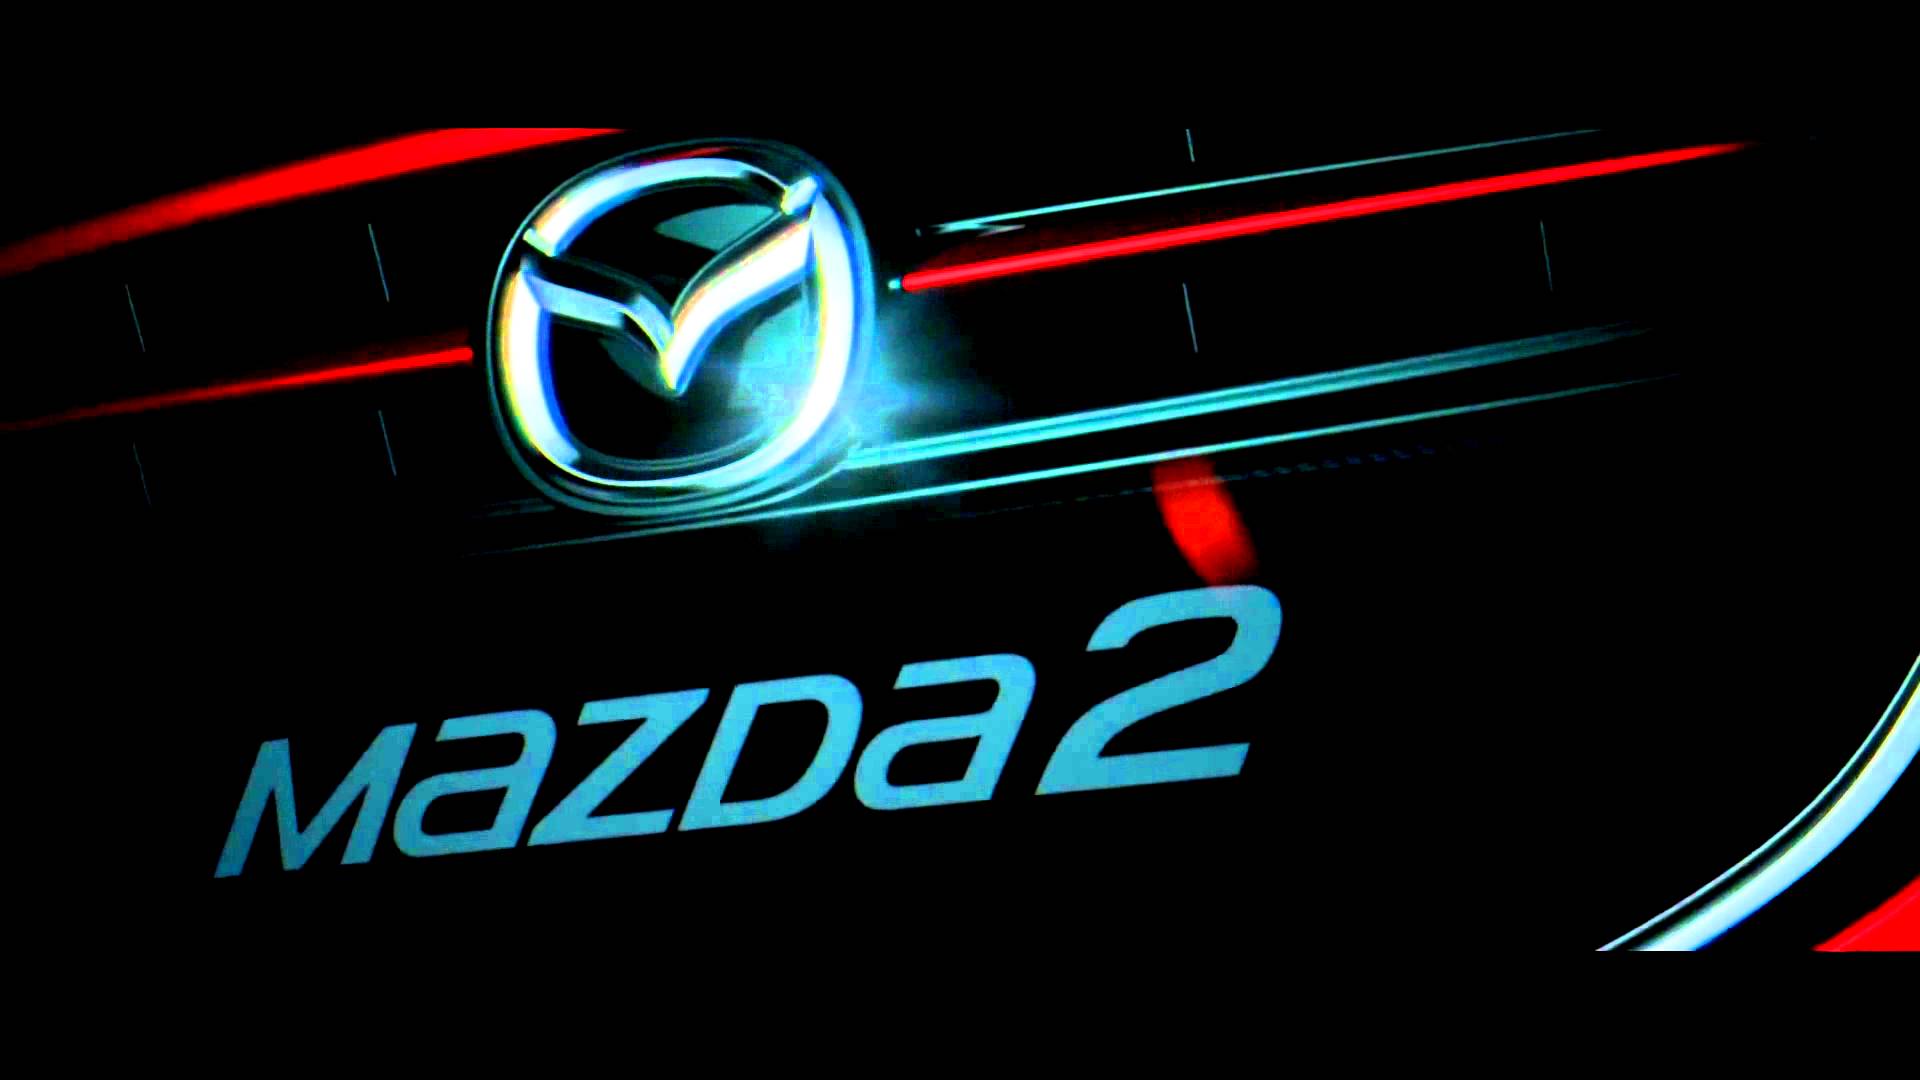 Mazda Demio Wallpaper Hd - มา ส ด้า 2 วอลเปเปอร์ , HD Wallpaper & Backgrounds